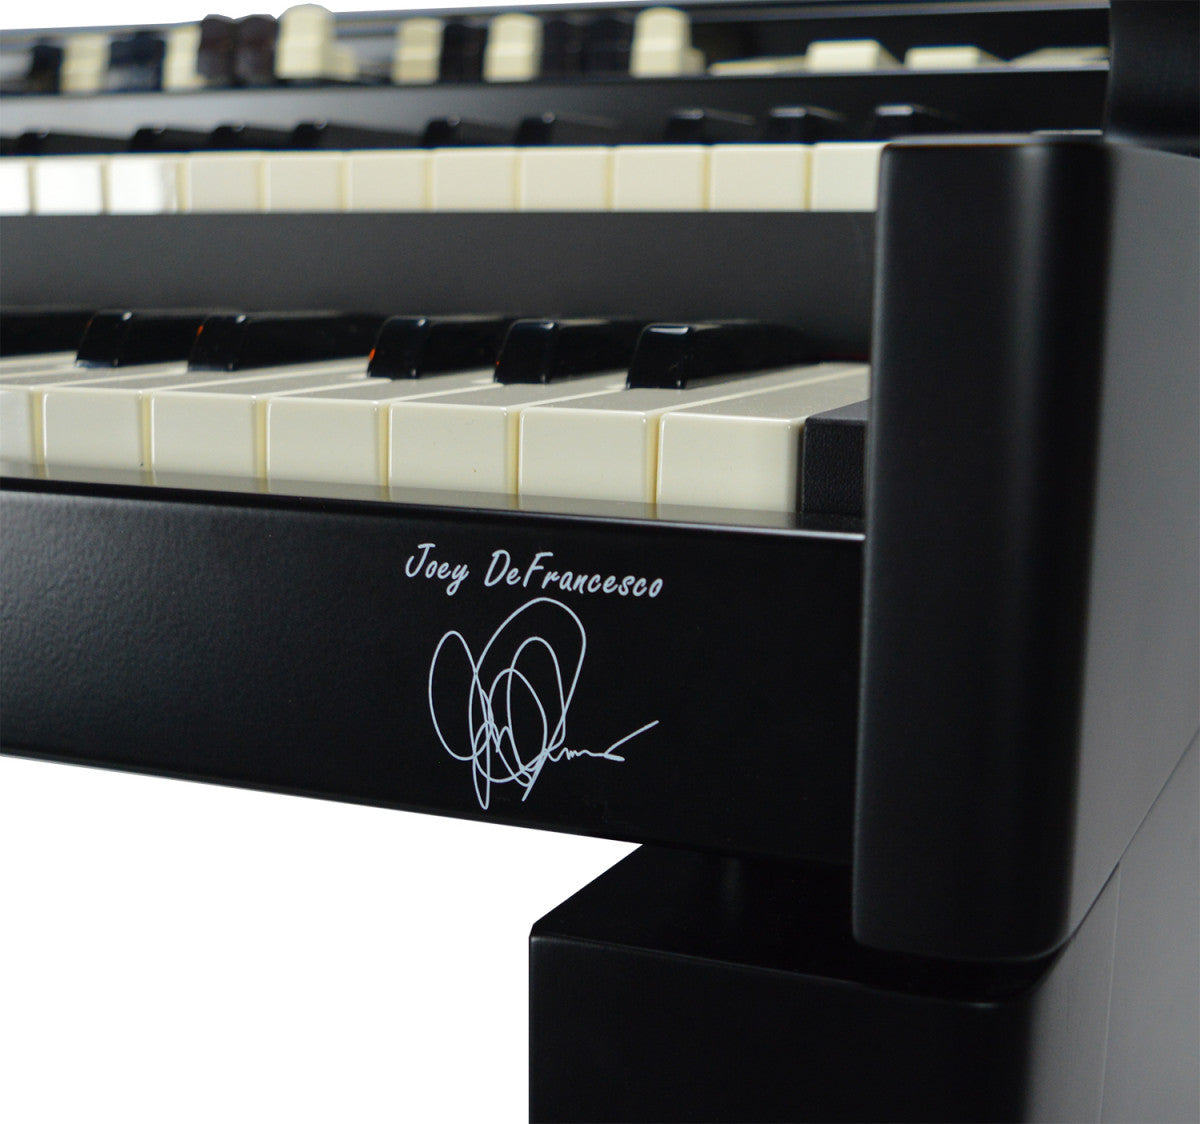 Close-up of Joey DeFrancesco's signature on the Viscount Legend Joey DeFrancesco Signature Organ